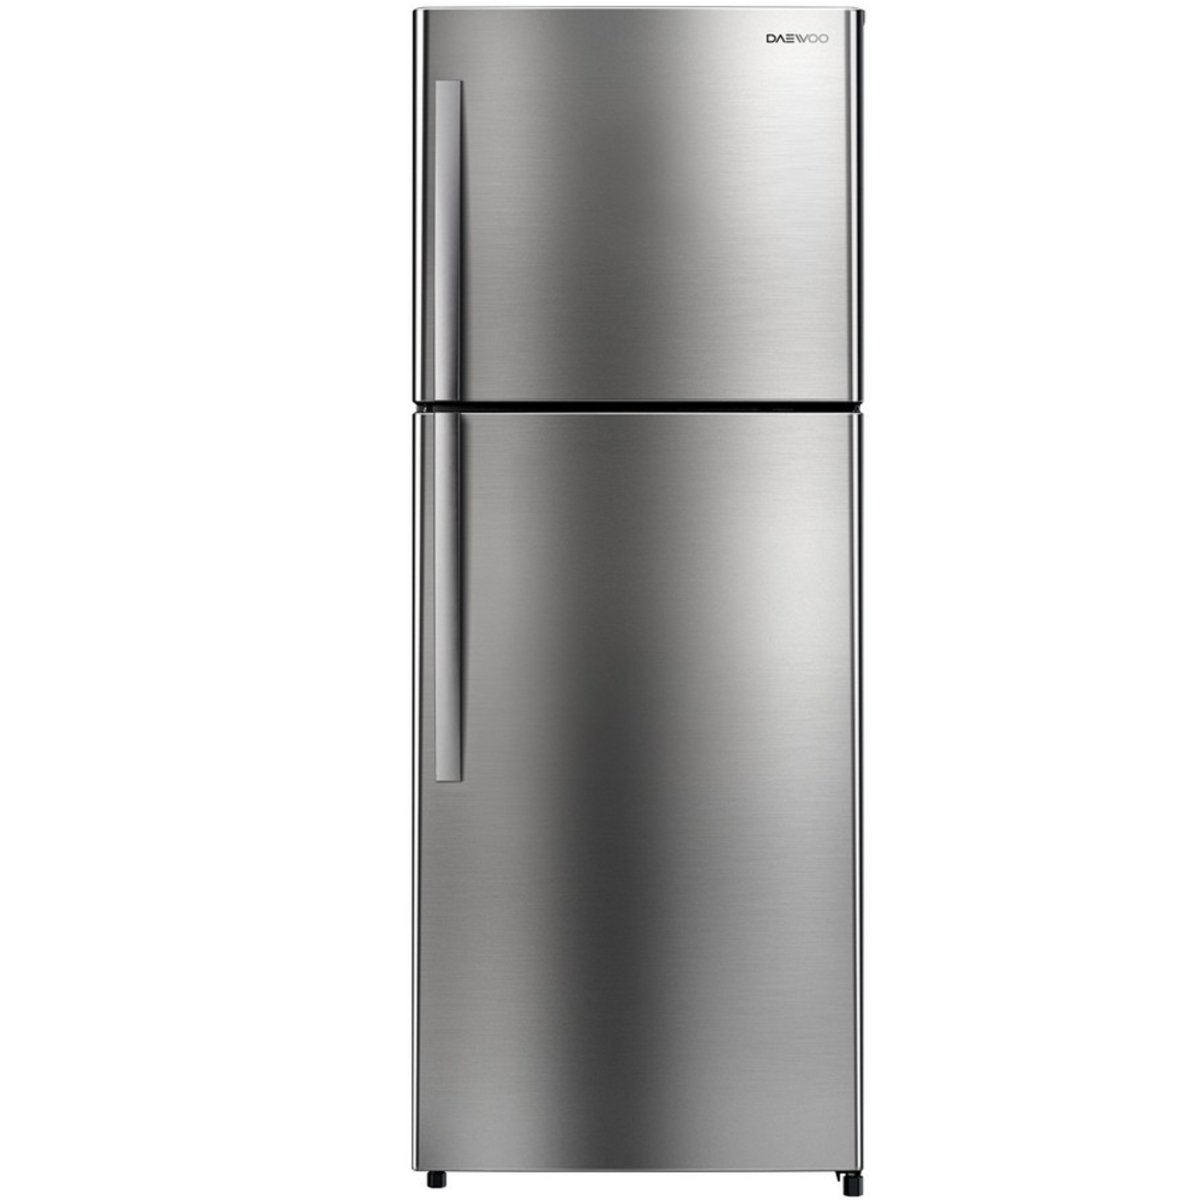 Daewooo Double Door Refrigerator FN435M3E 435Ltr